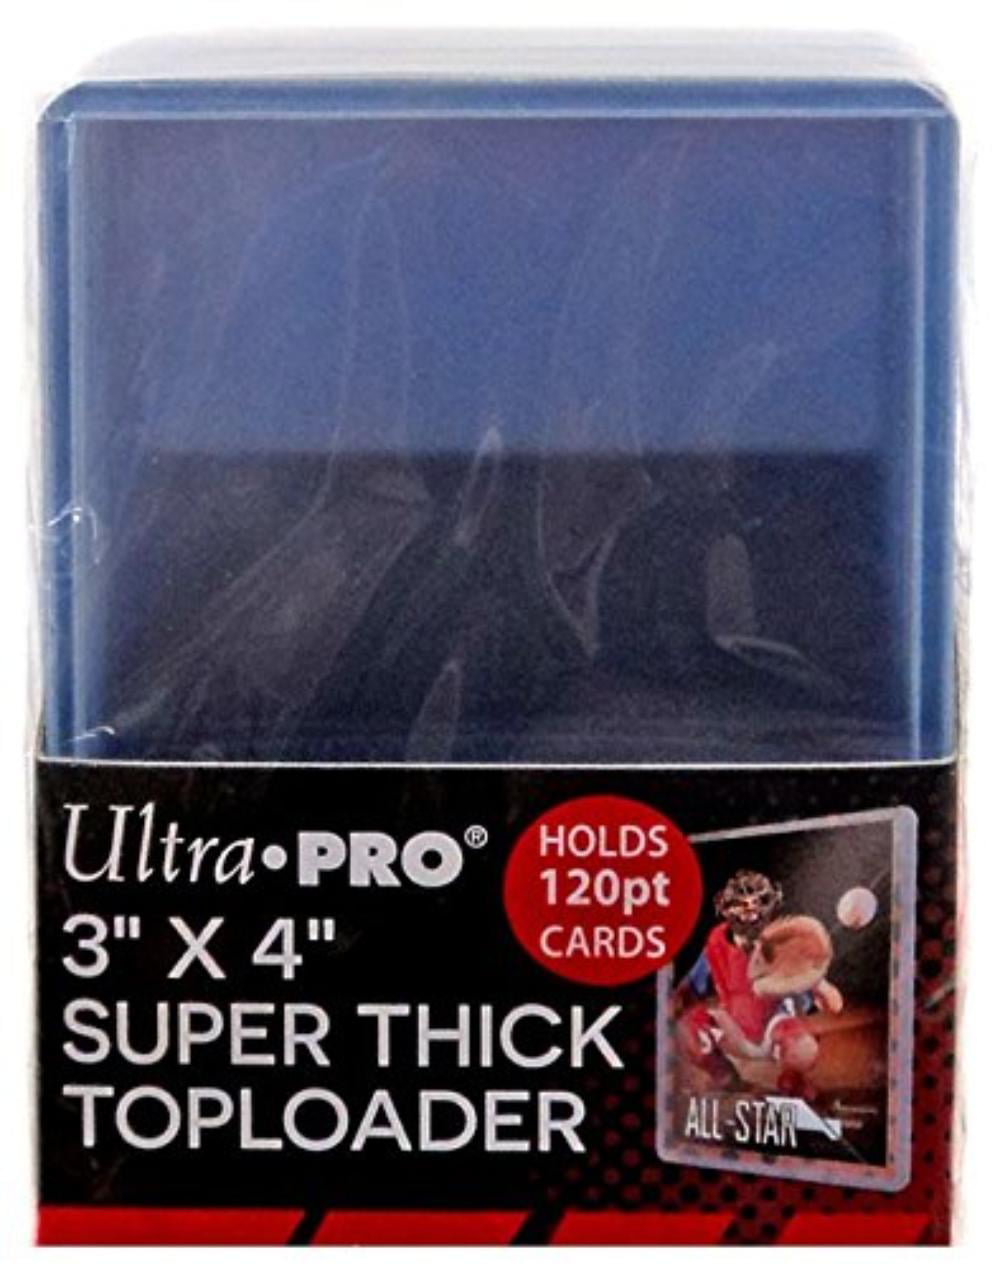 40 x Ultra PRO Thick 260pt Card Toploaders Toploader Loader Top Loaders 4x 10ct 